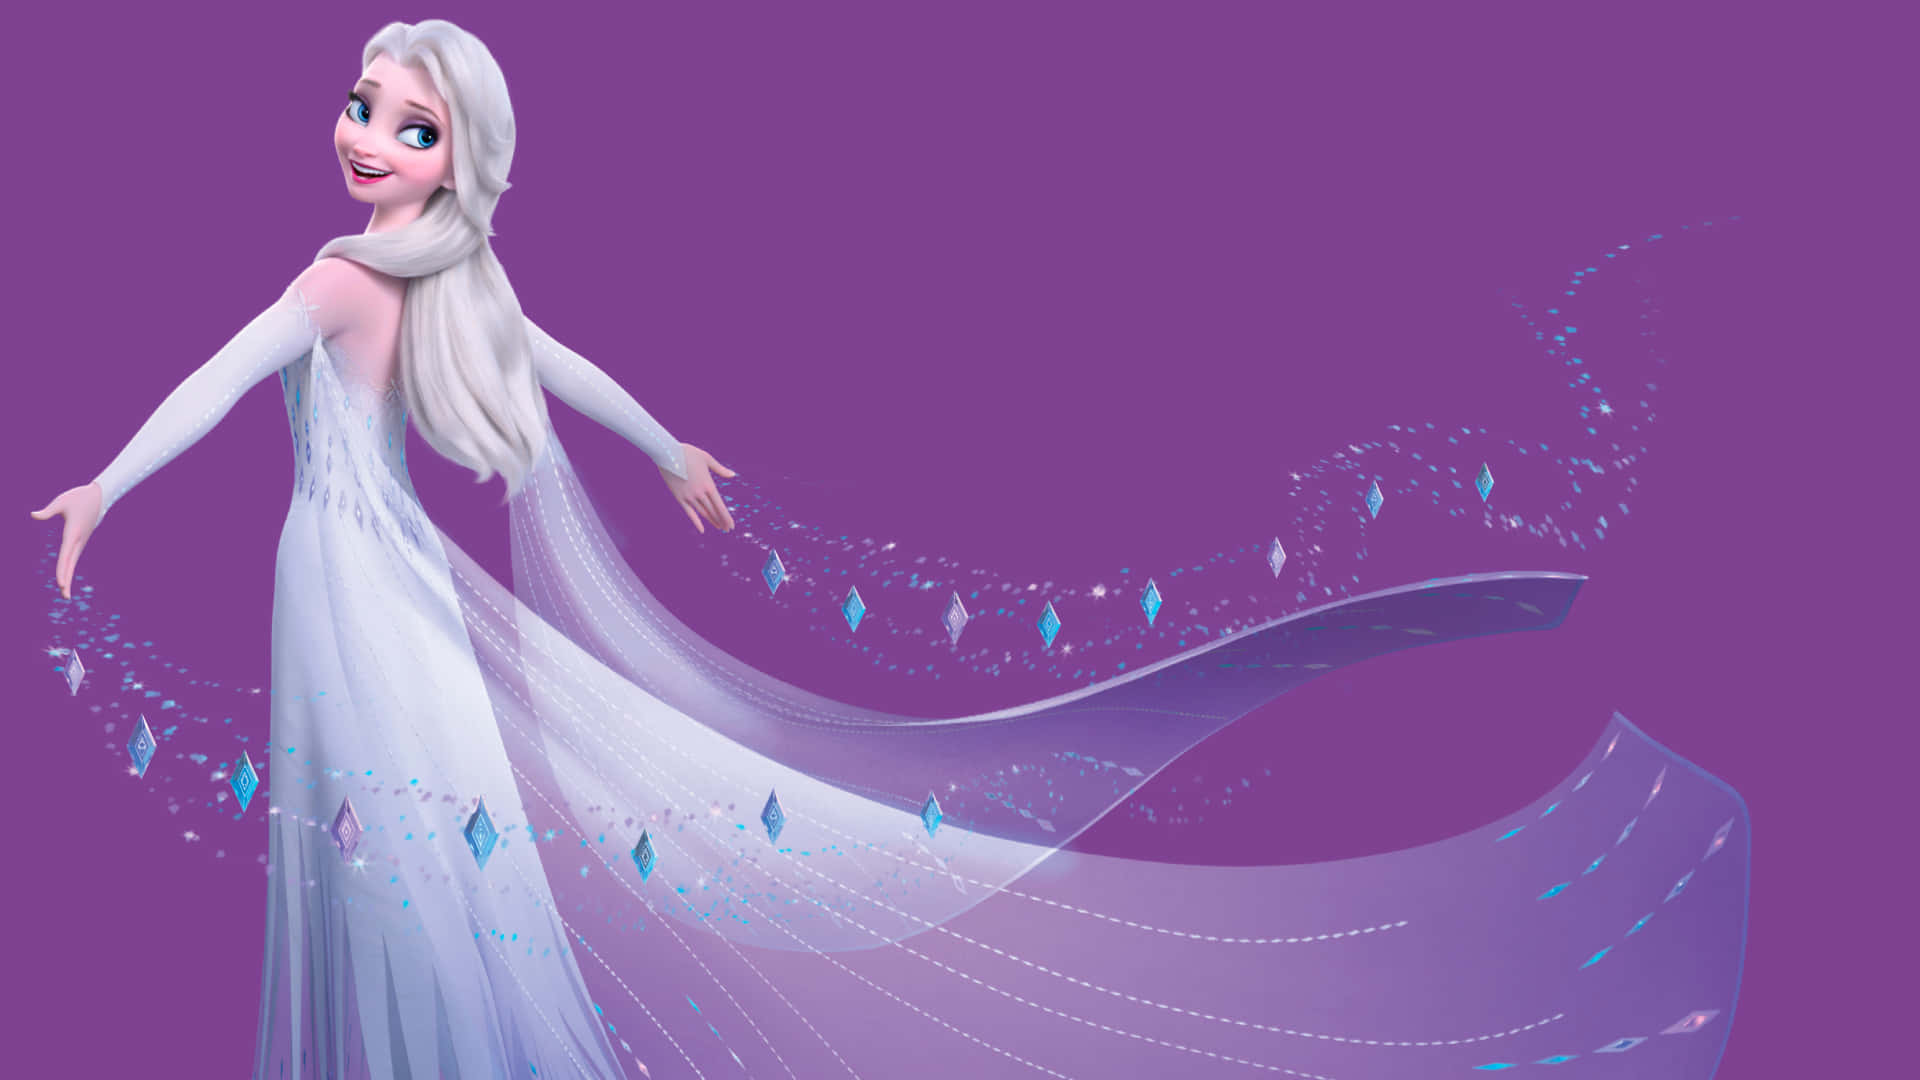 Elsa in her white dress from the Disney movie, Frozen 2 Wallpaper